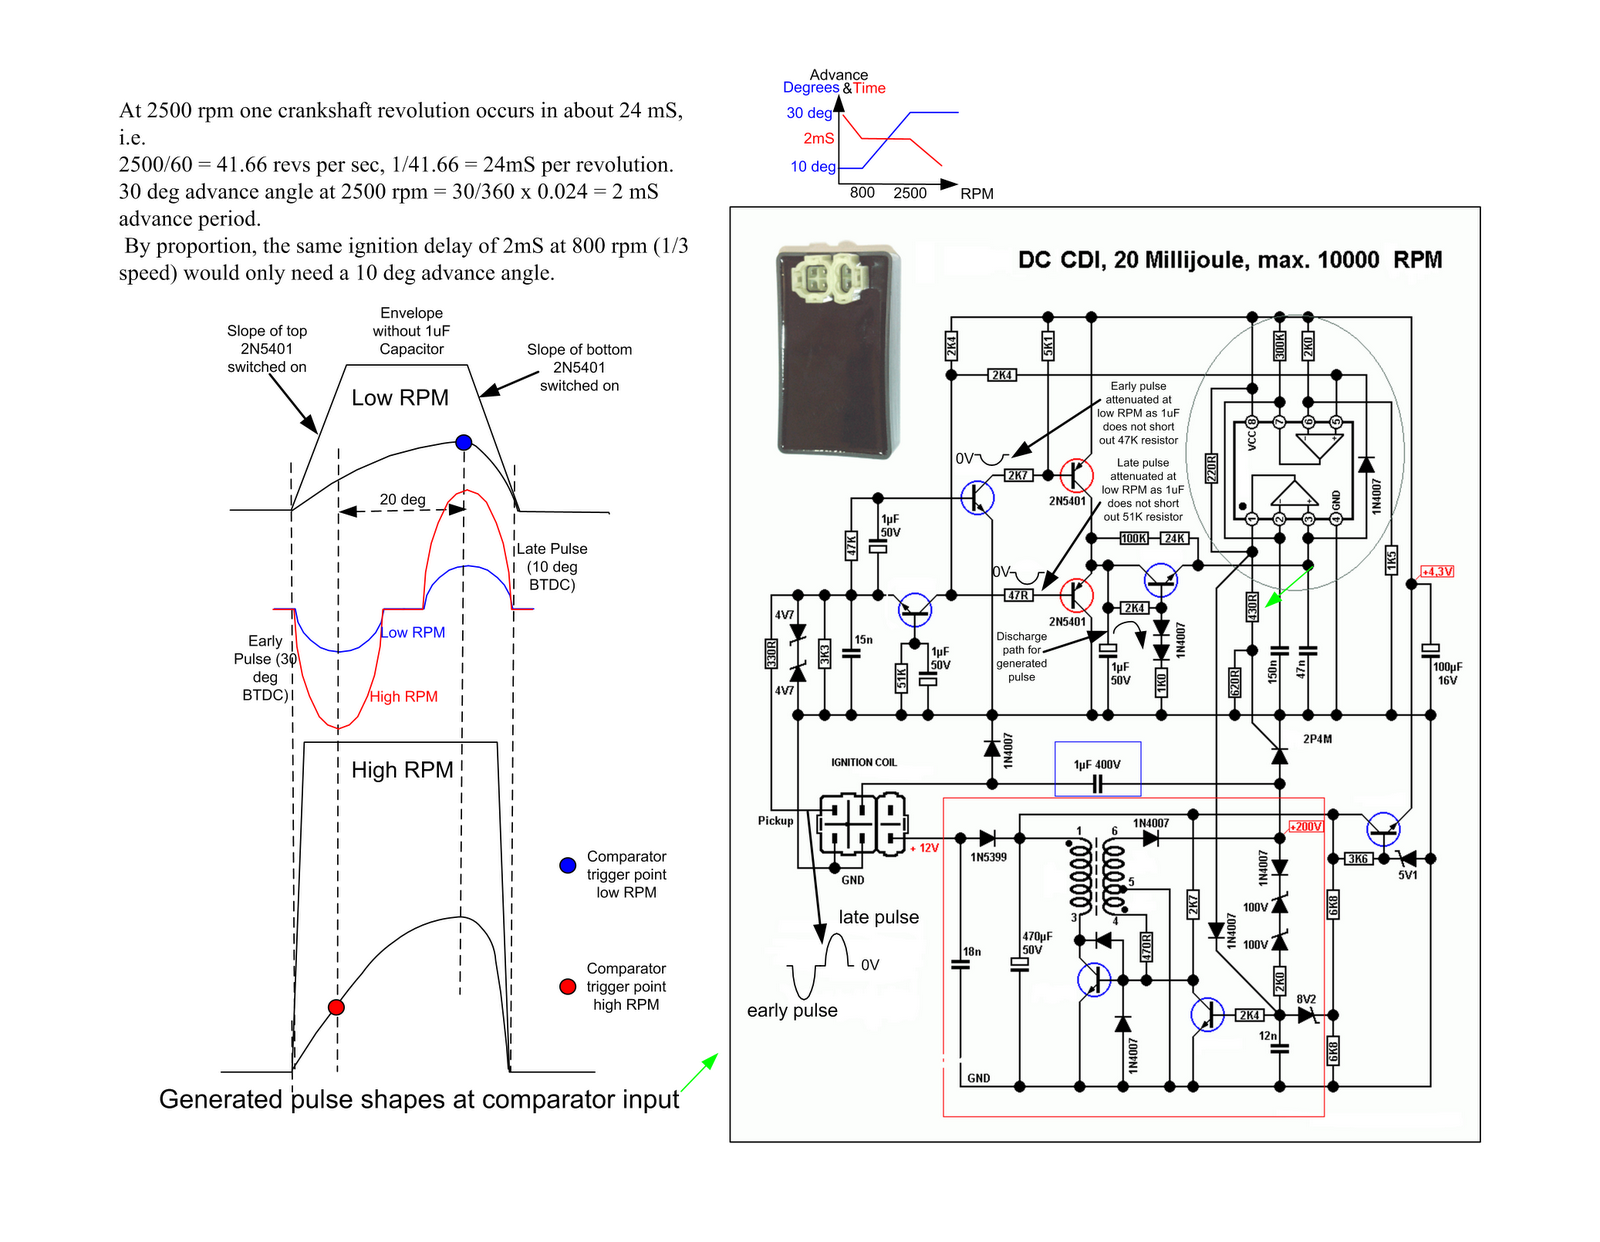 Dc Cdi Unit Circuit Diagram 10